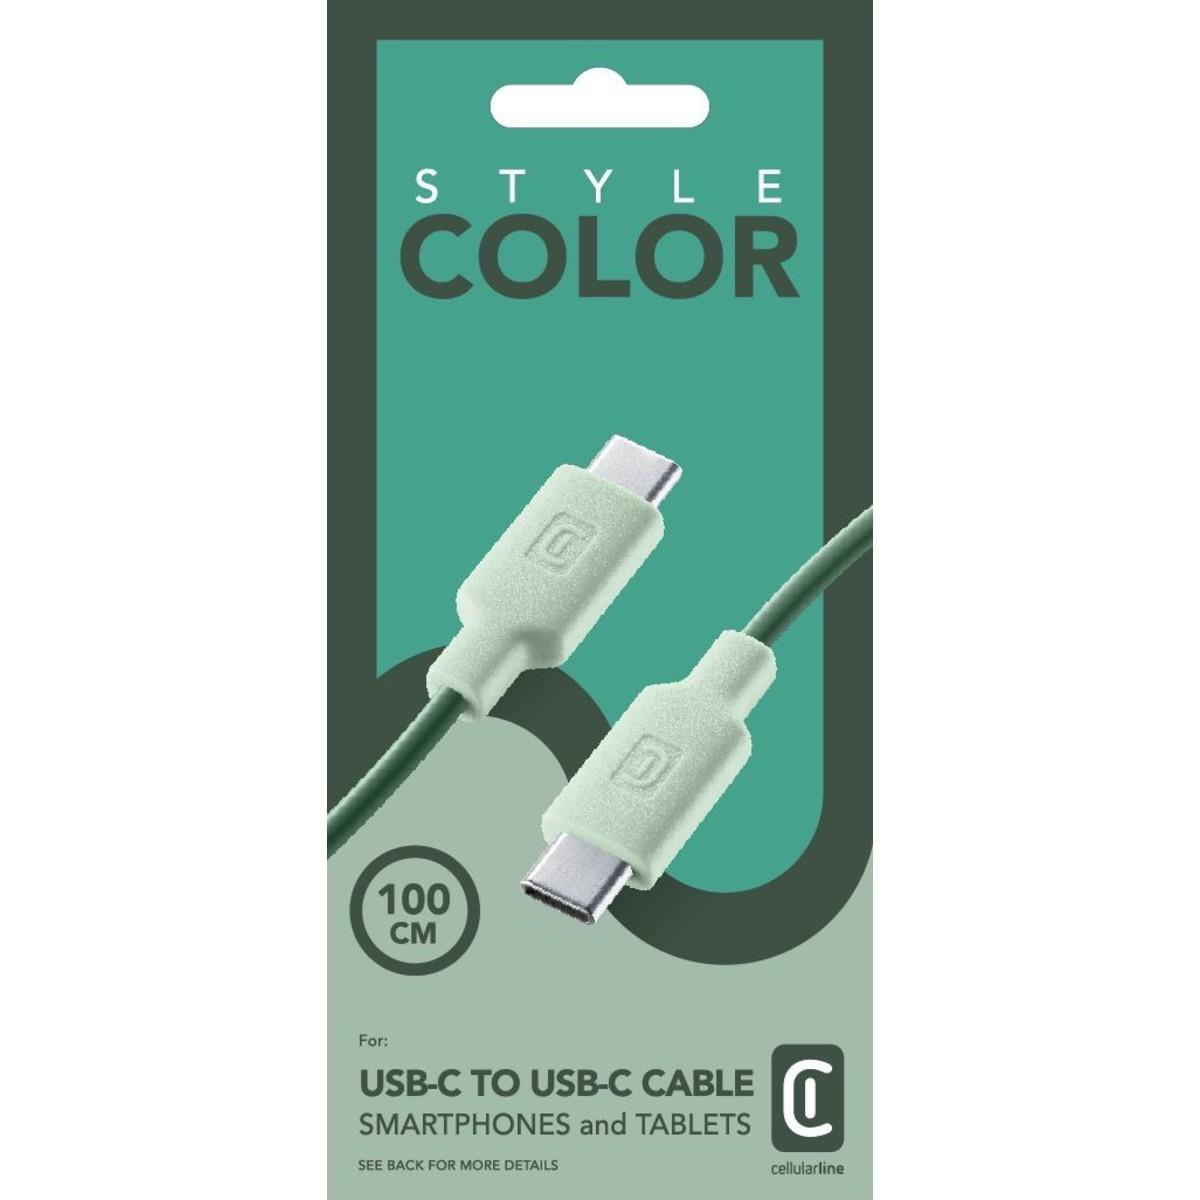 Lade- und Datenkabel STYLE COLOR 100cm USB Type-C auf USB Type-C